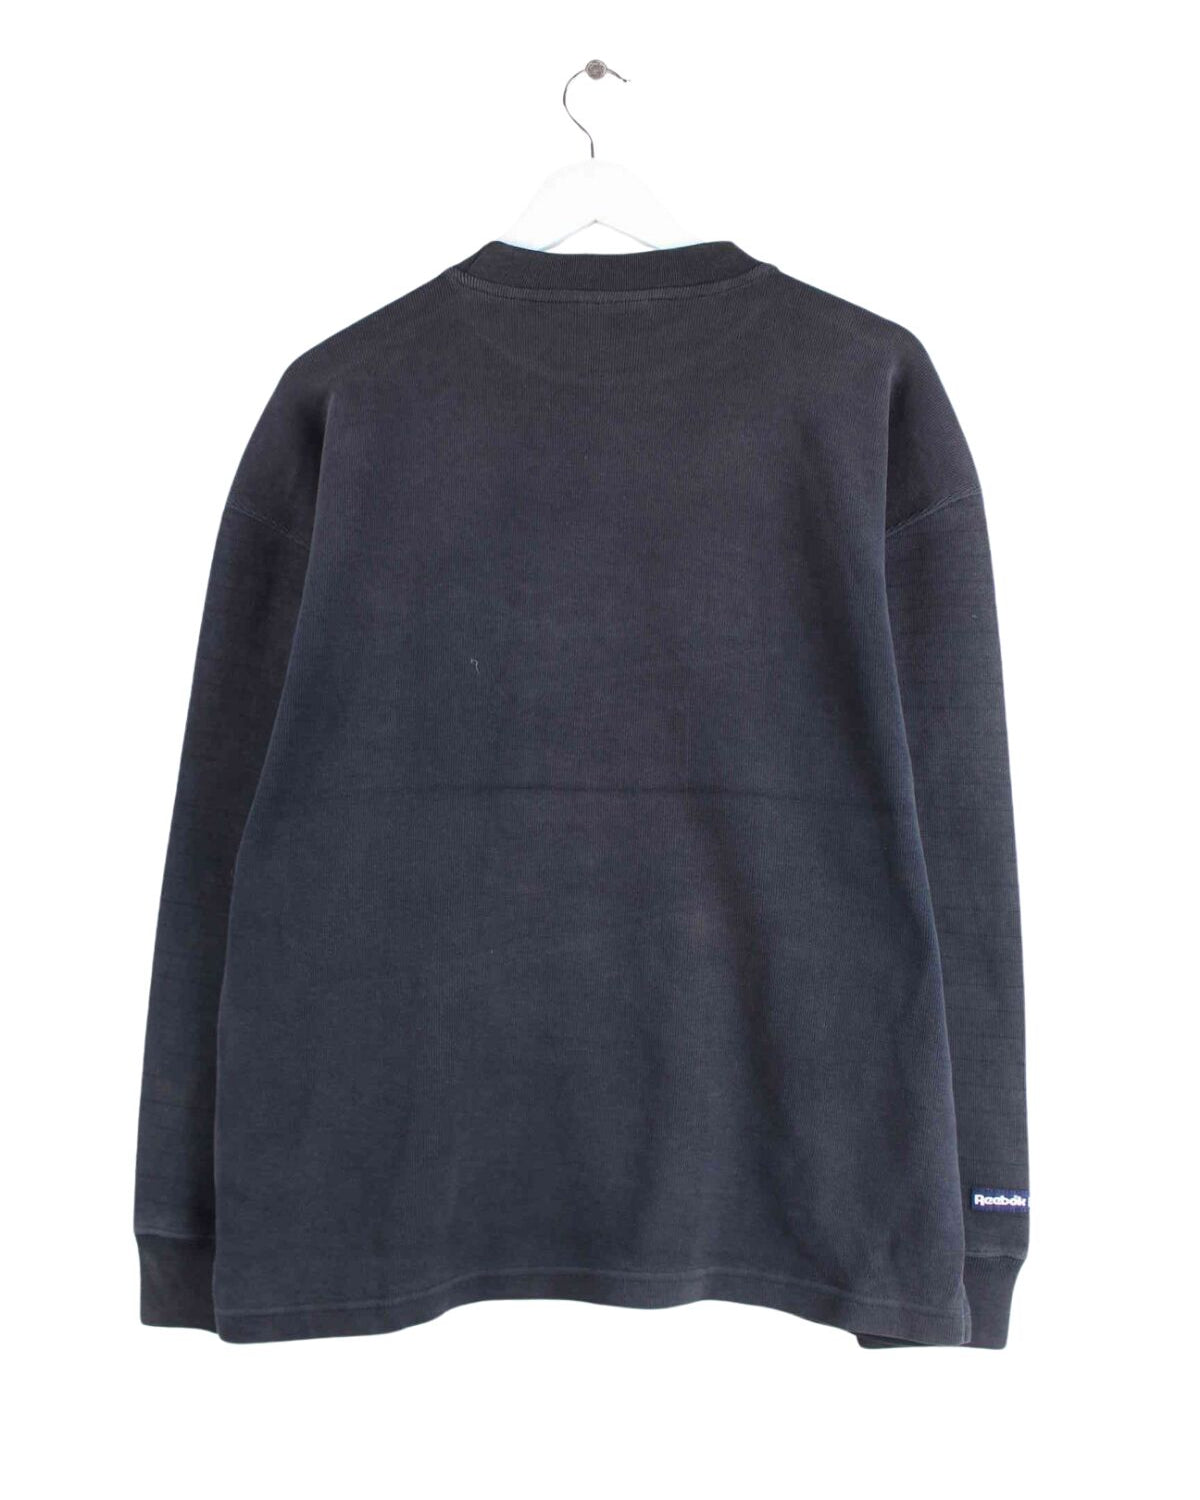 Reebok Embroidered Sweater Schwarz S (back image)